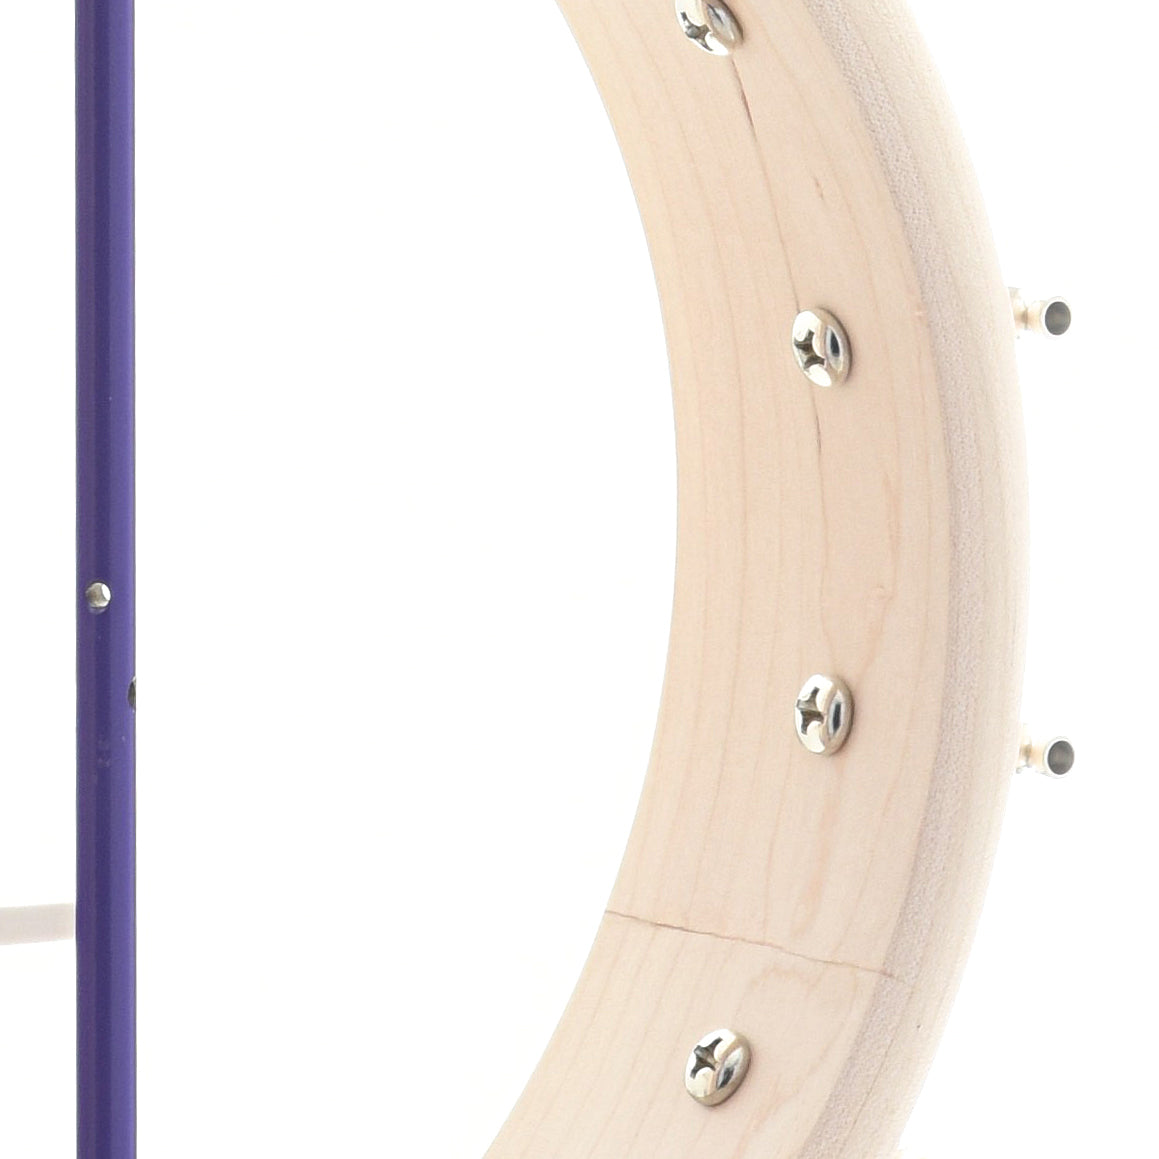 Image 9 of Deering Goodtime Junior, Sinbad Purple - SKU# GOODJR-PUR : Product Type Other : Elderly Instruments